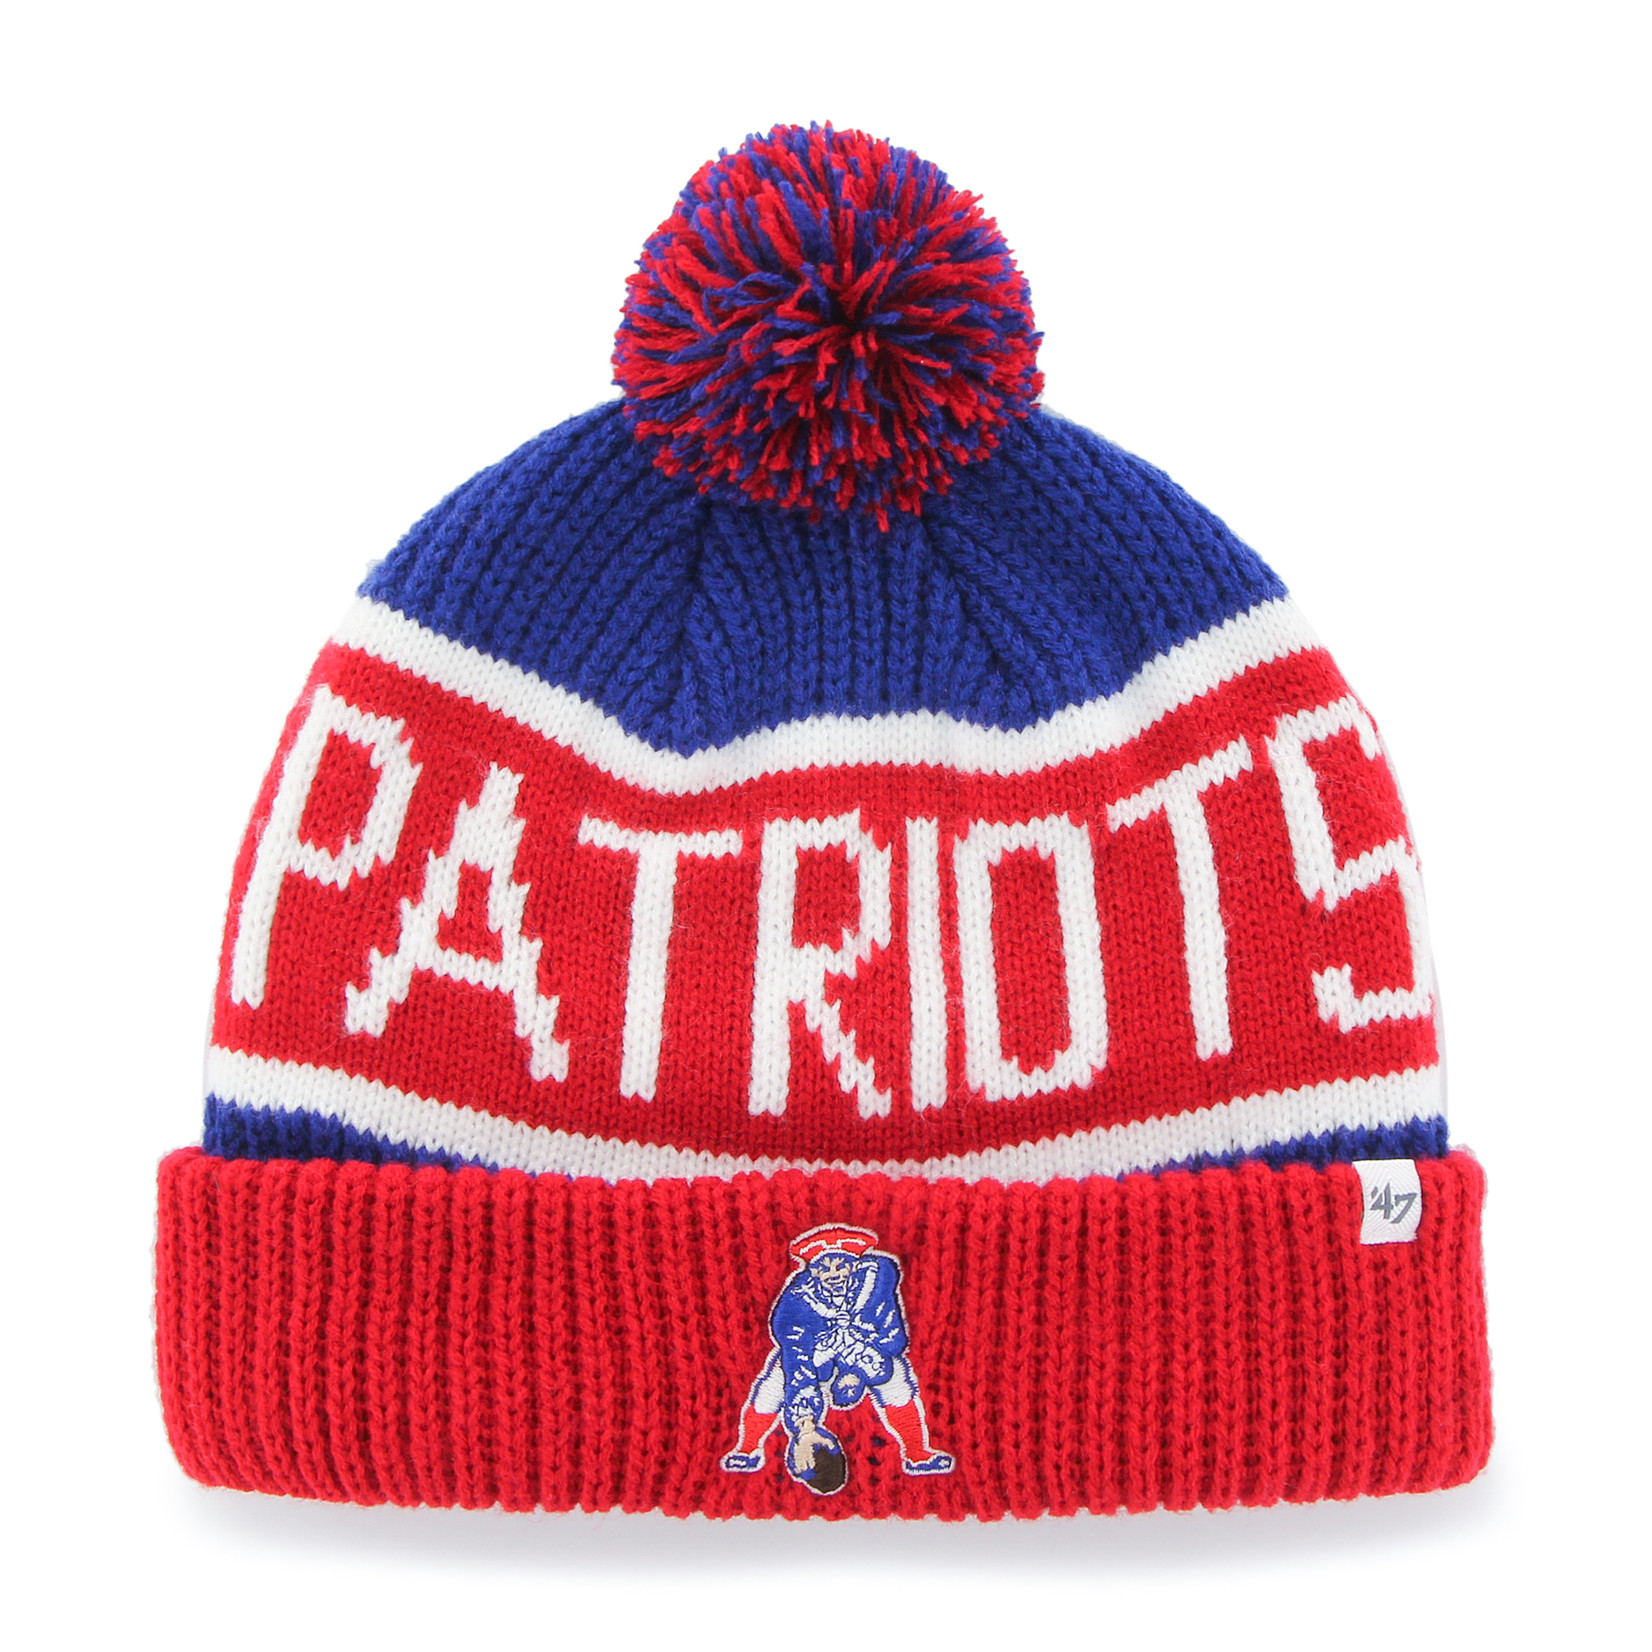 '47 Brand Patriots Winter Hat - Throwback Pom Pom